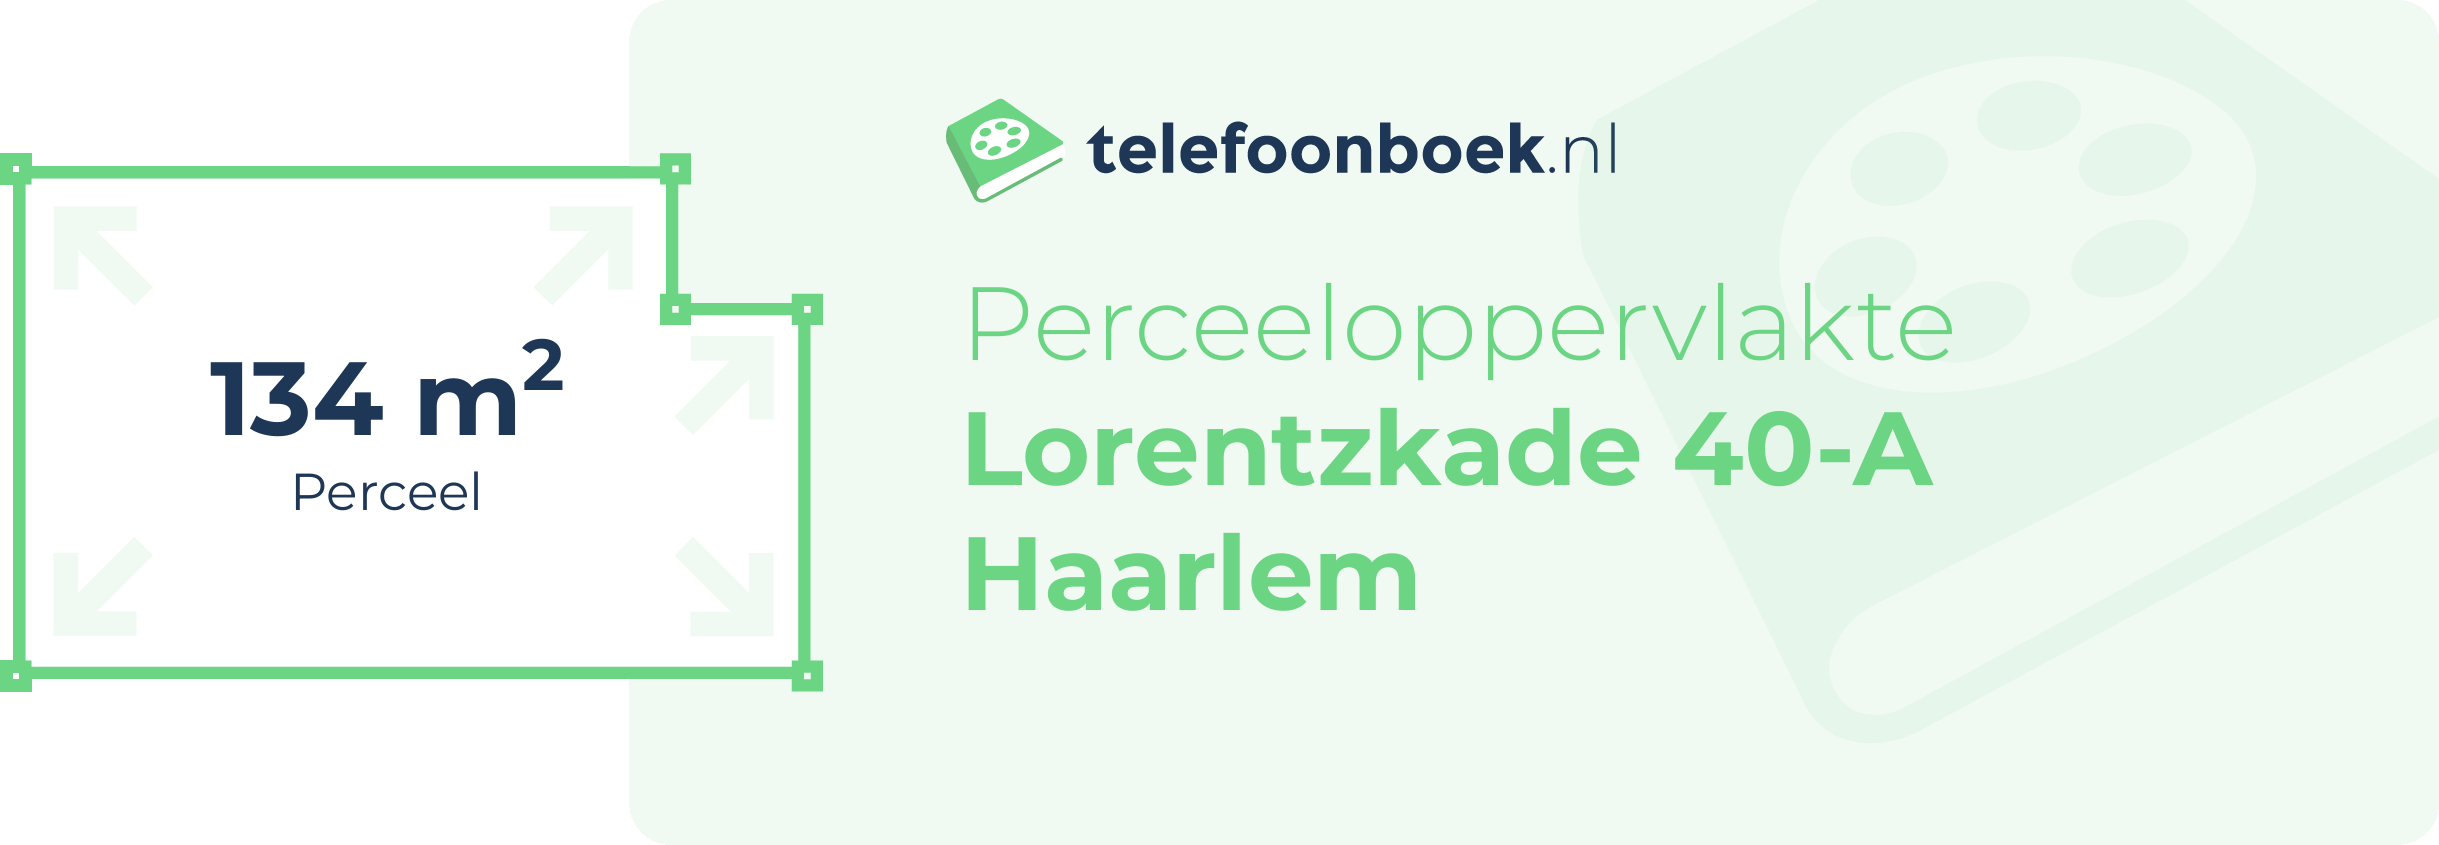 Perceeloppervlakte Lorentzkade 40-A Haarlem